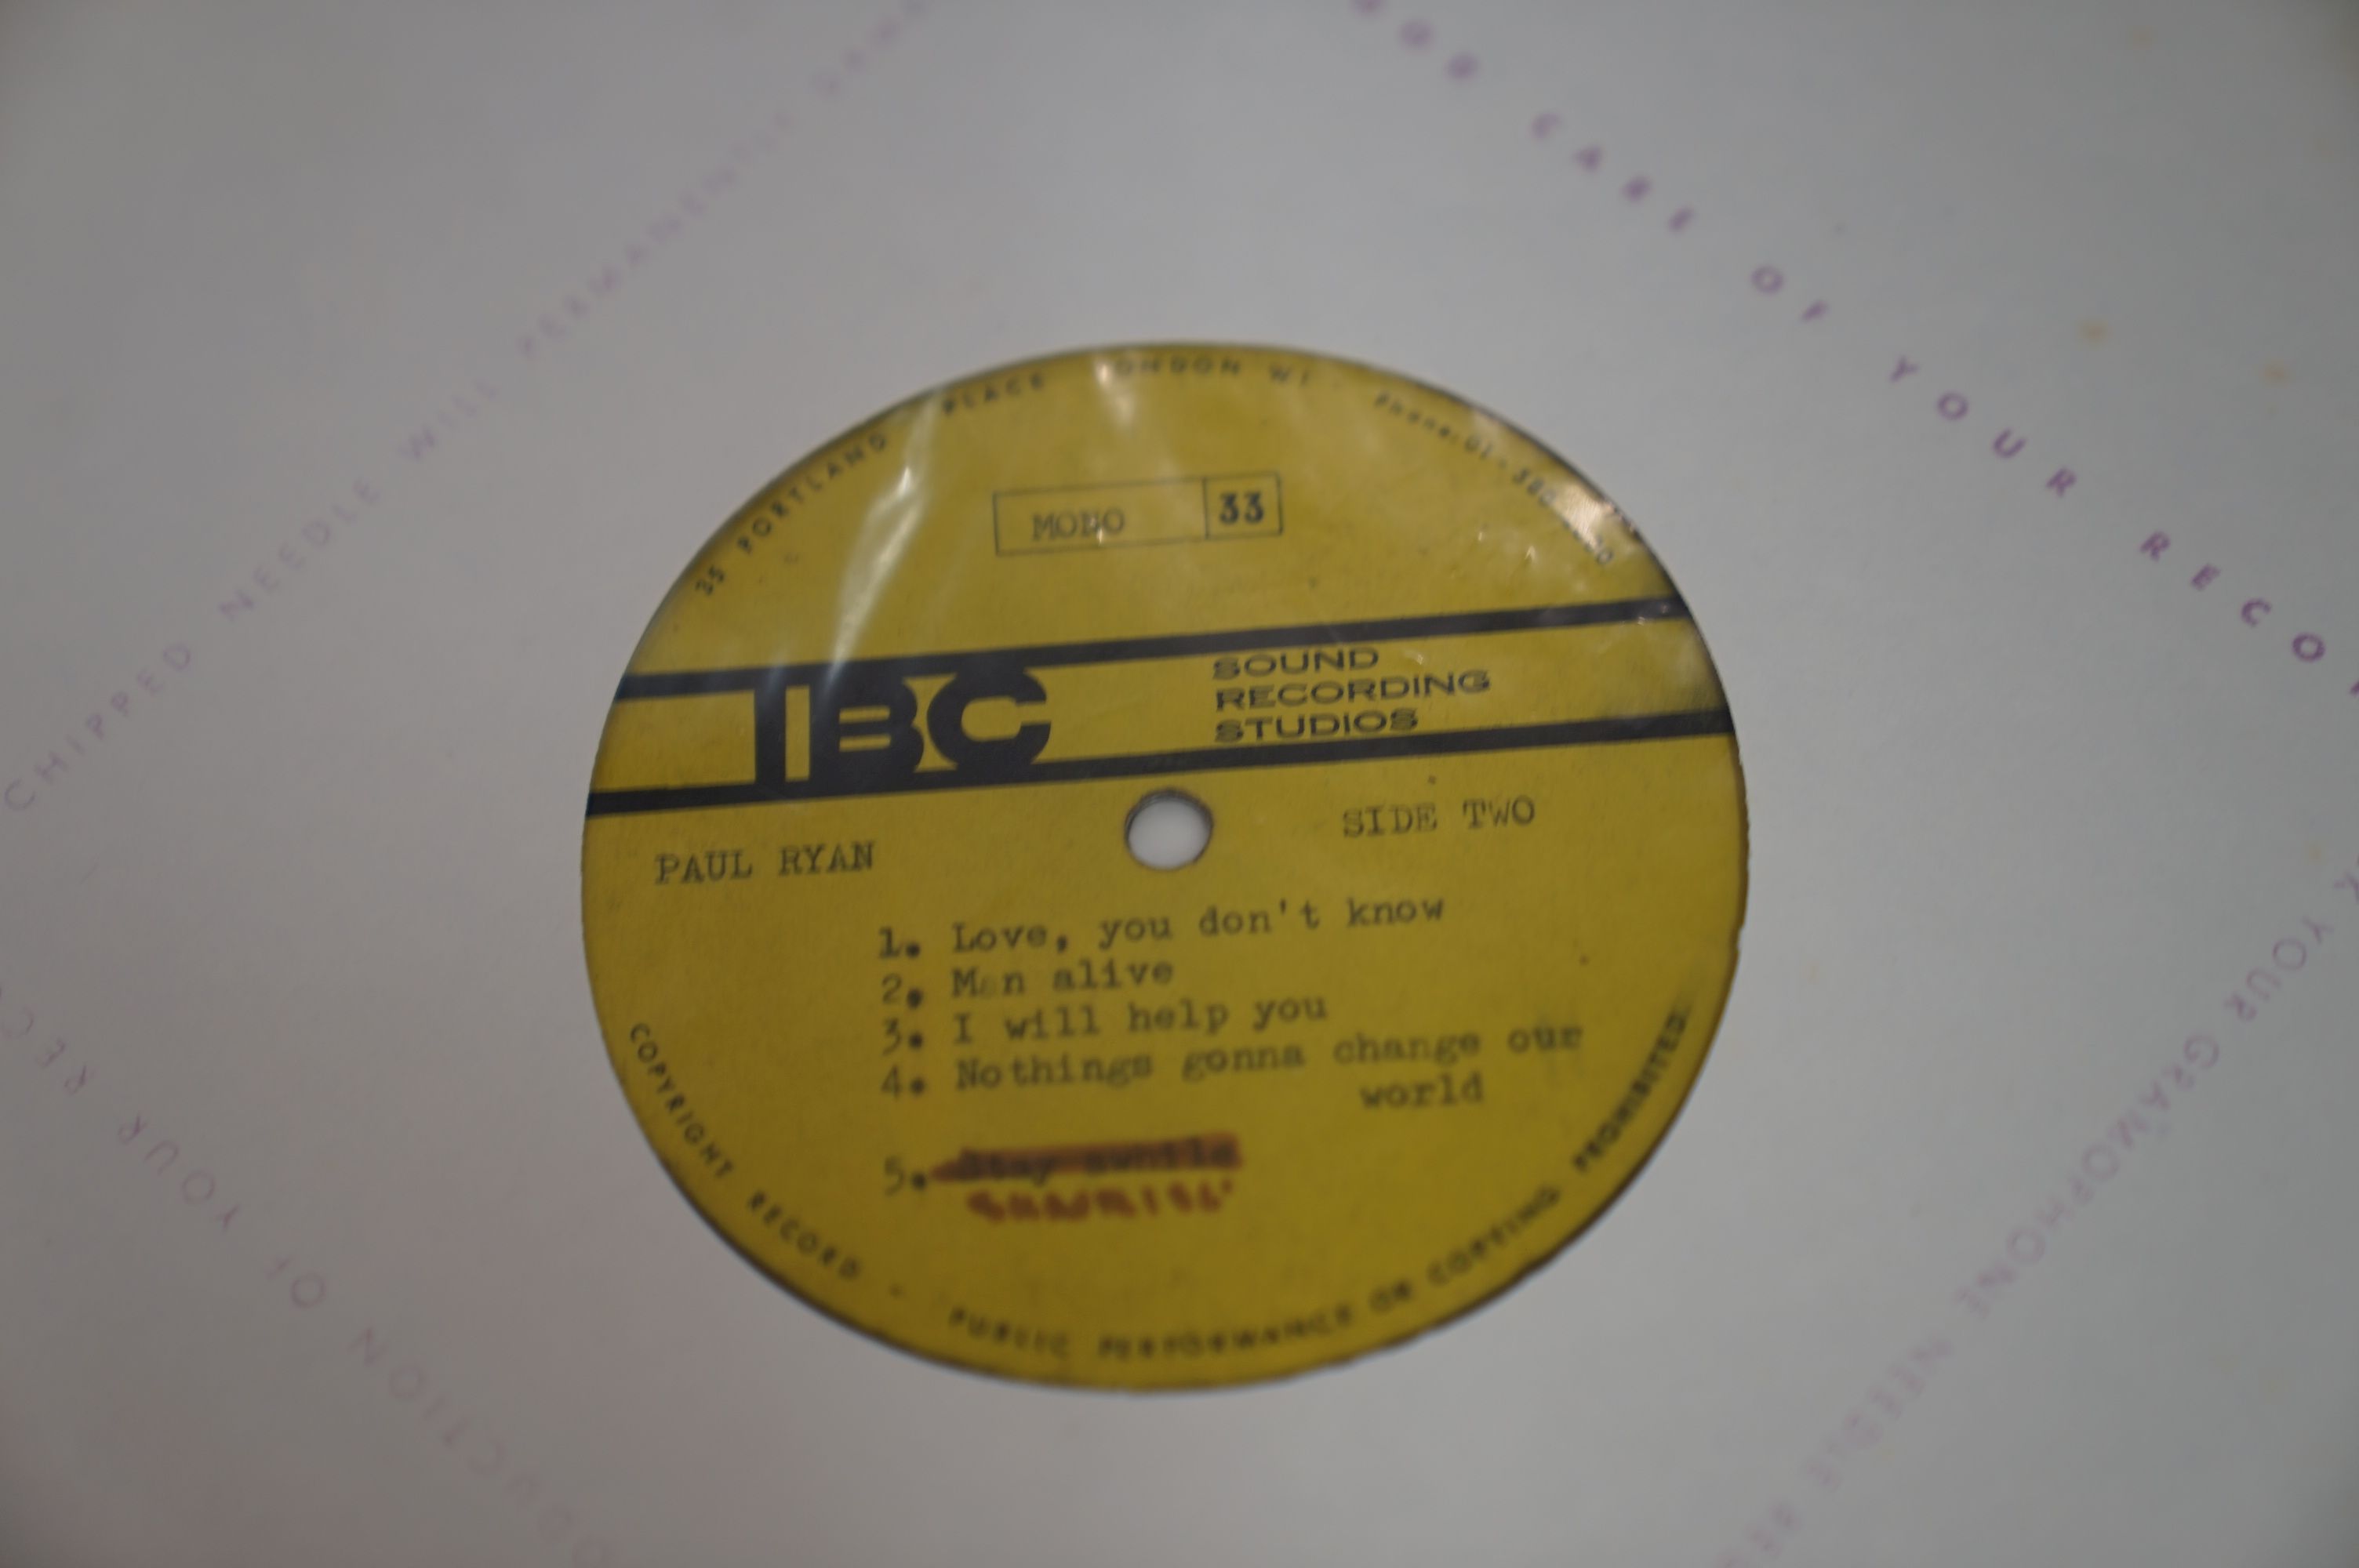 VINYL - PAUL RYAN - AMAZING UNIQUE UNRELEASED 1969 ALBUM DOUBLE SIDED ACETATE. WOW, IT DOES NOT